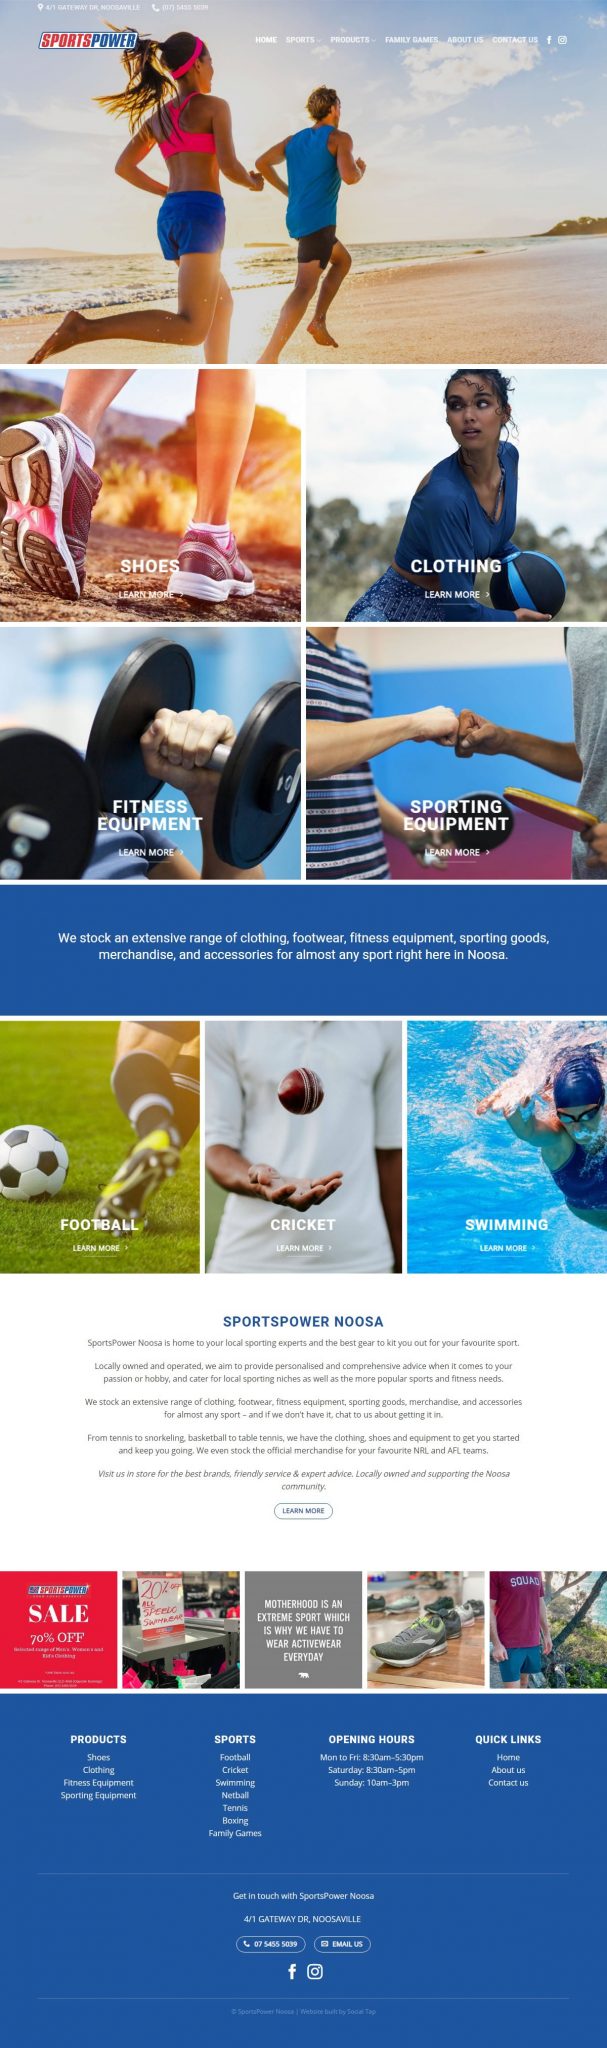 Hospitality Tourism Website Design Sportspower Noosa